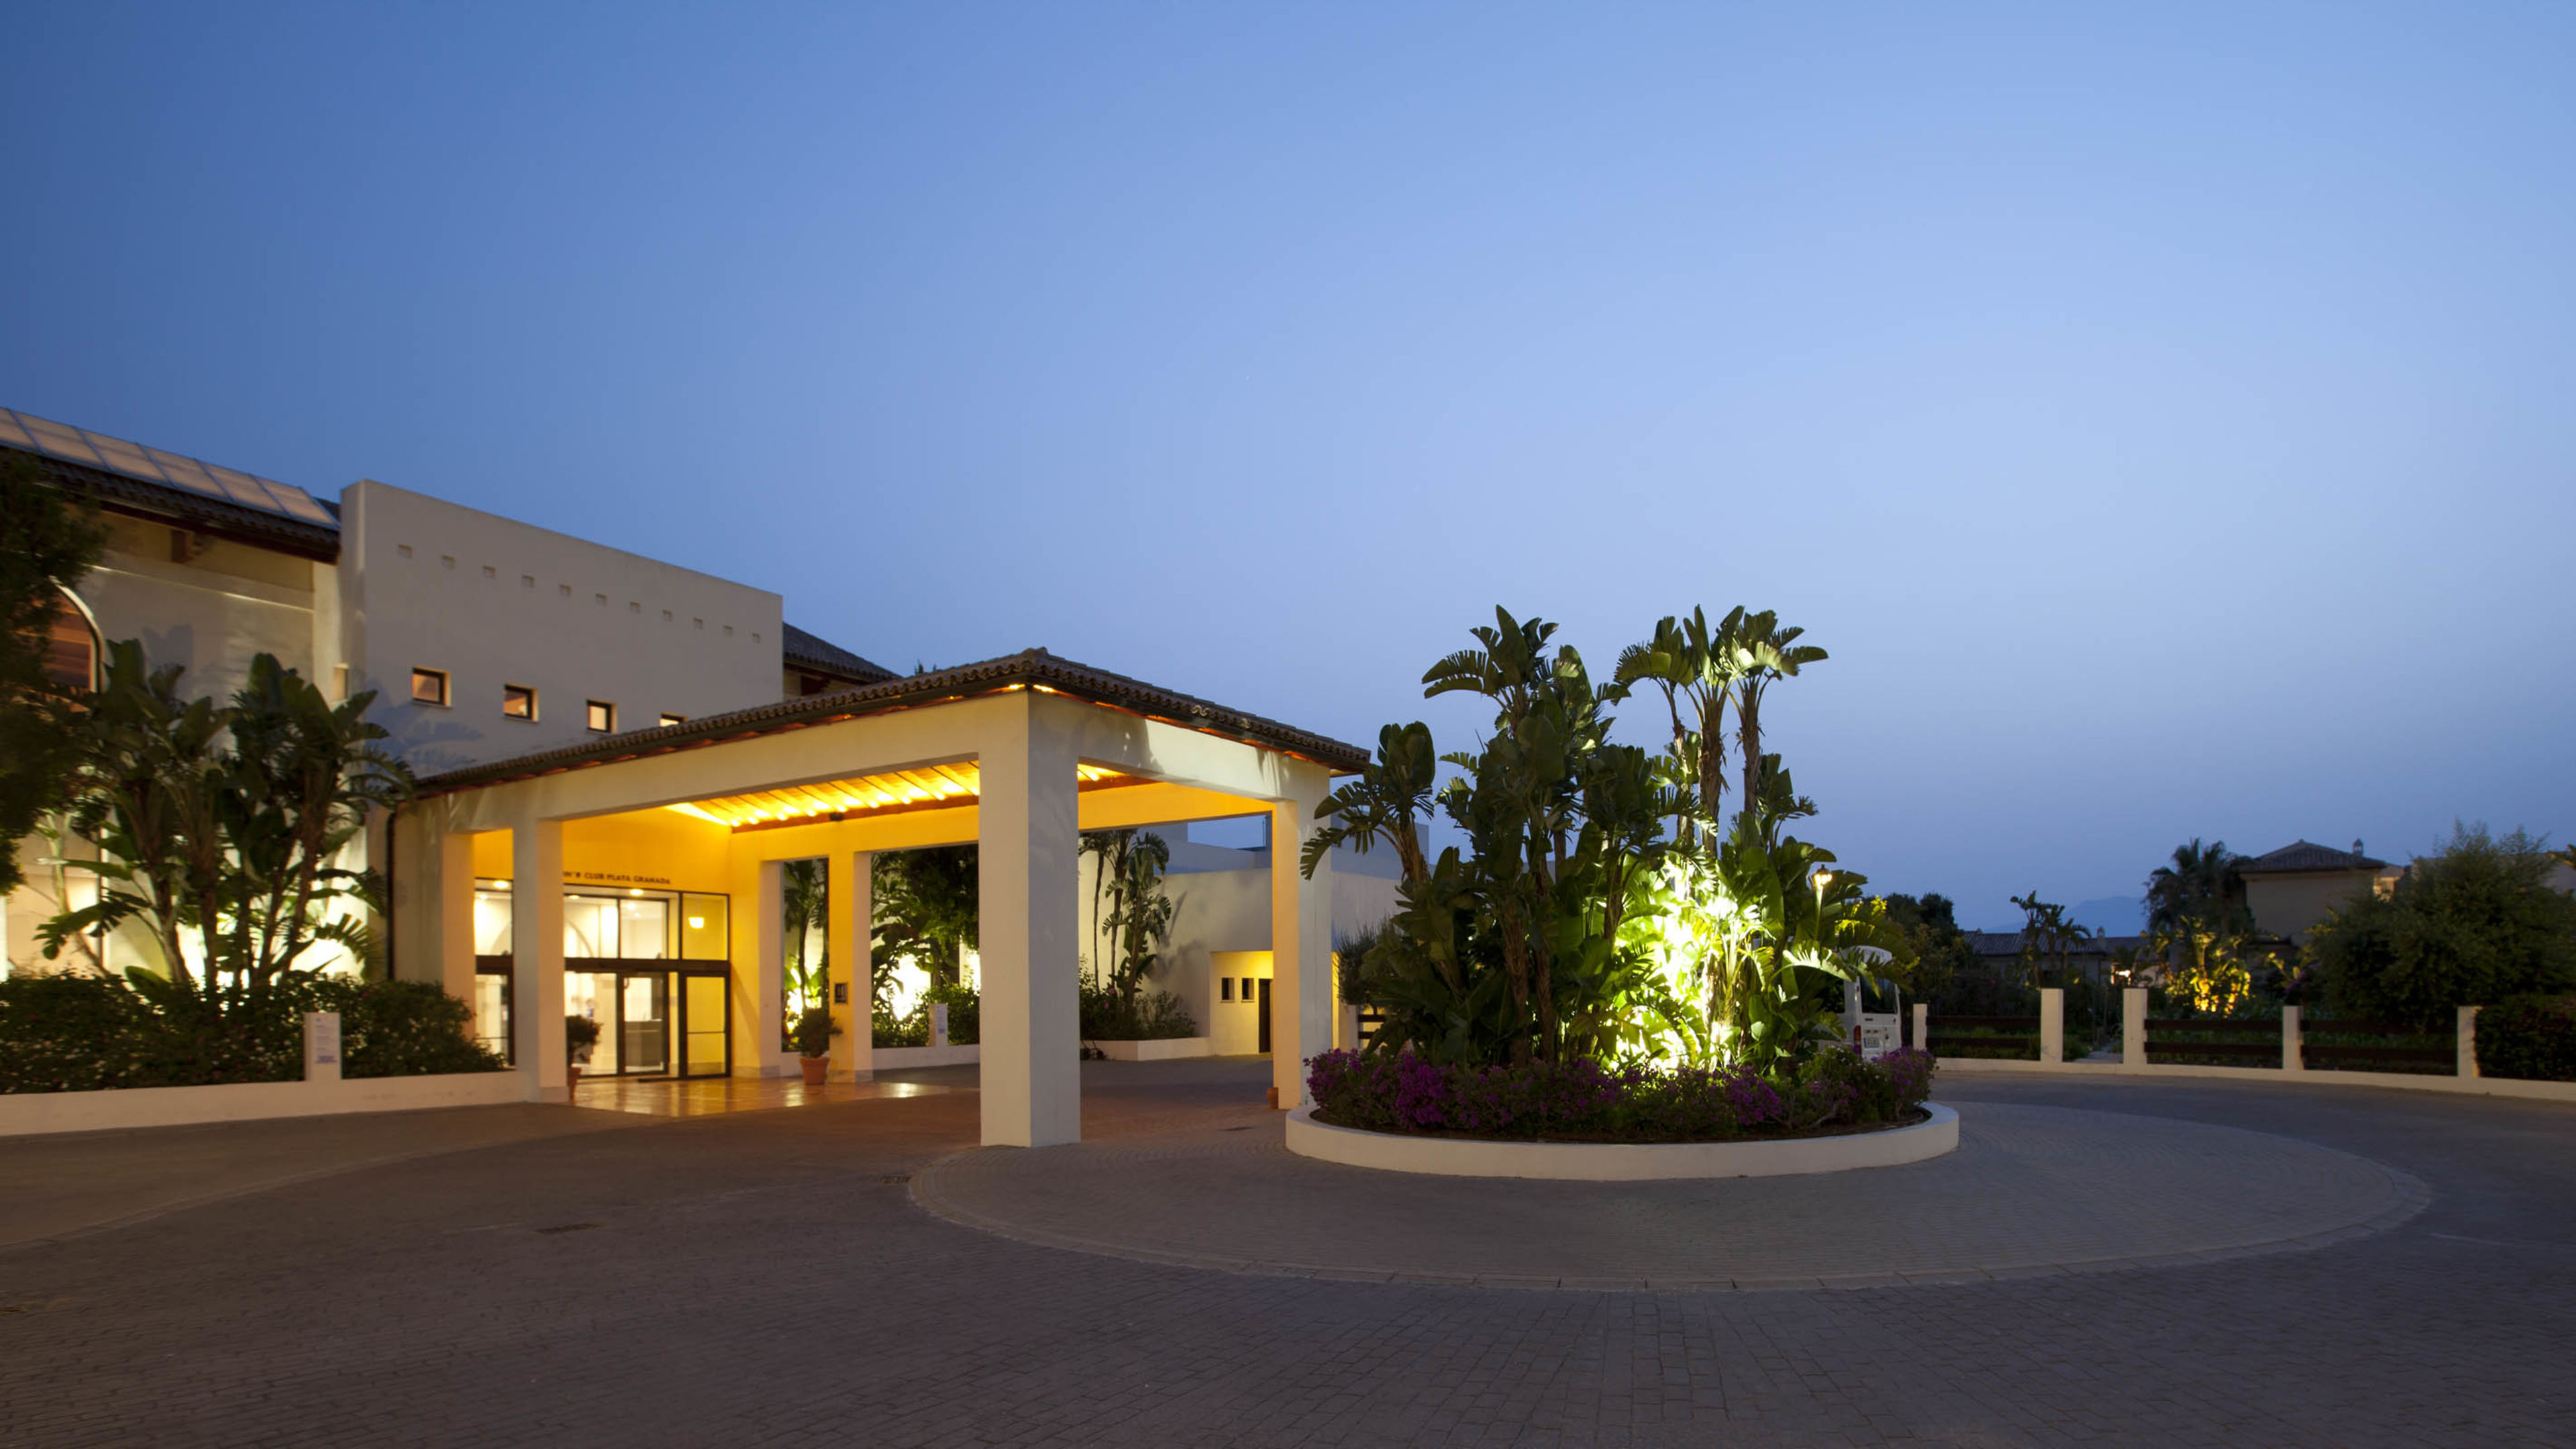 Playa Granada Club Resort